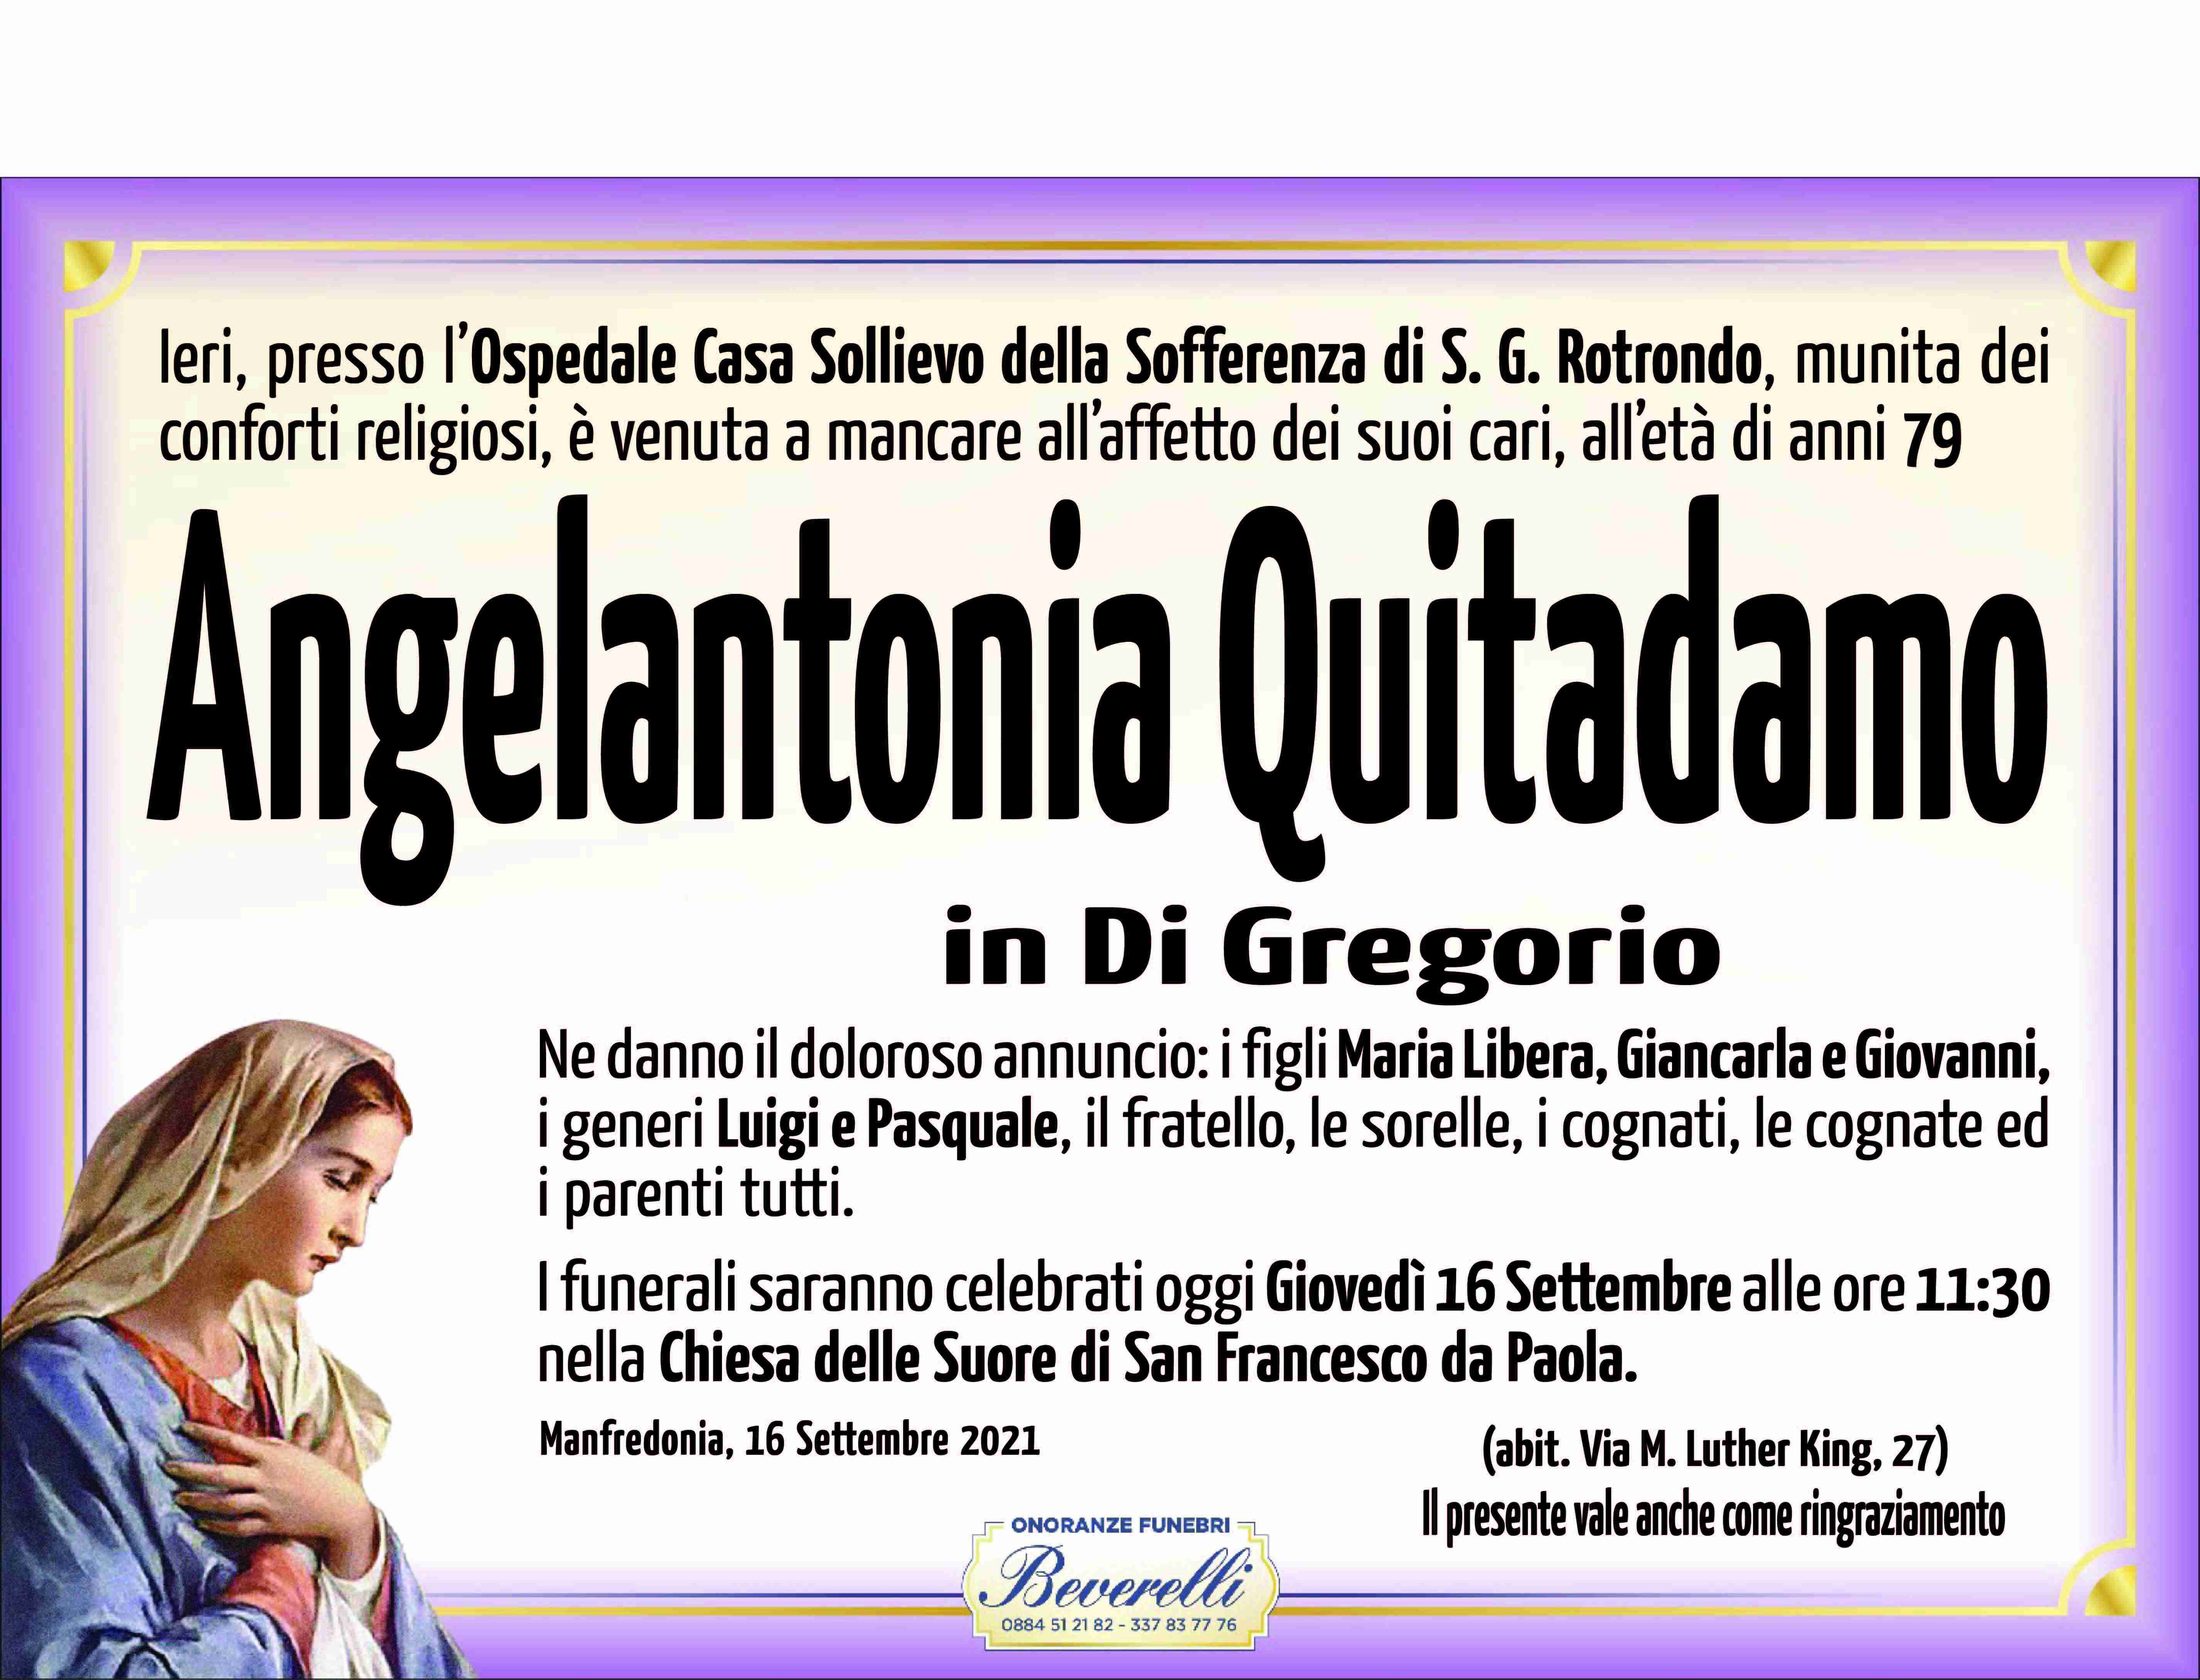 Angelantonia Quitadamo